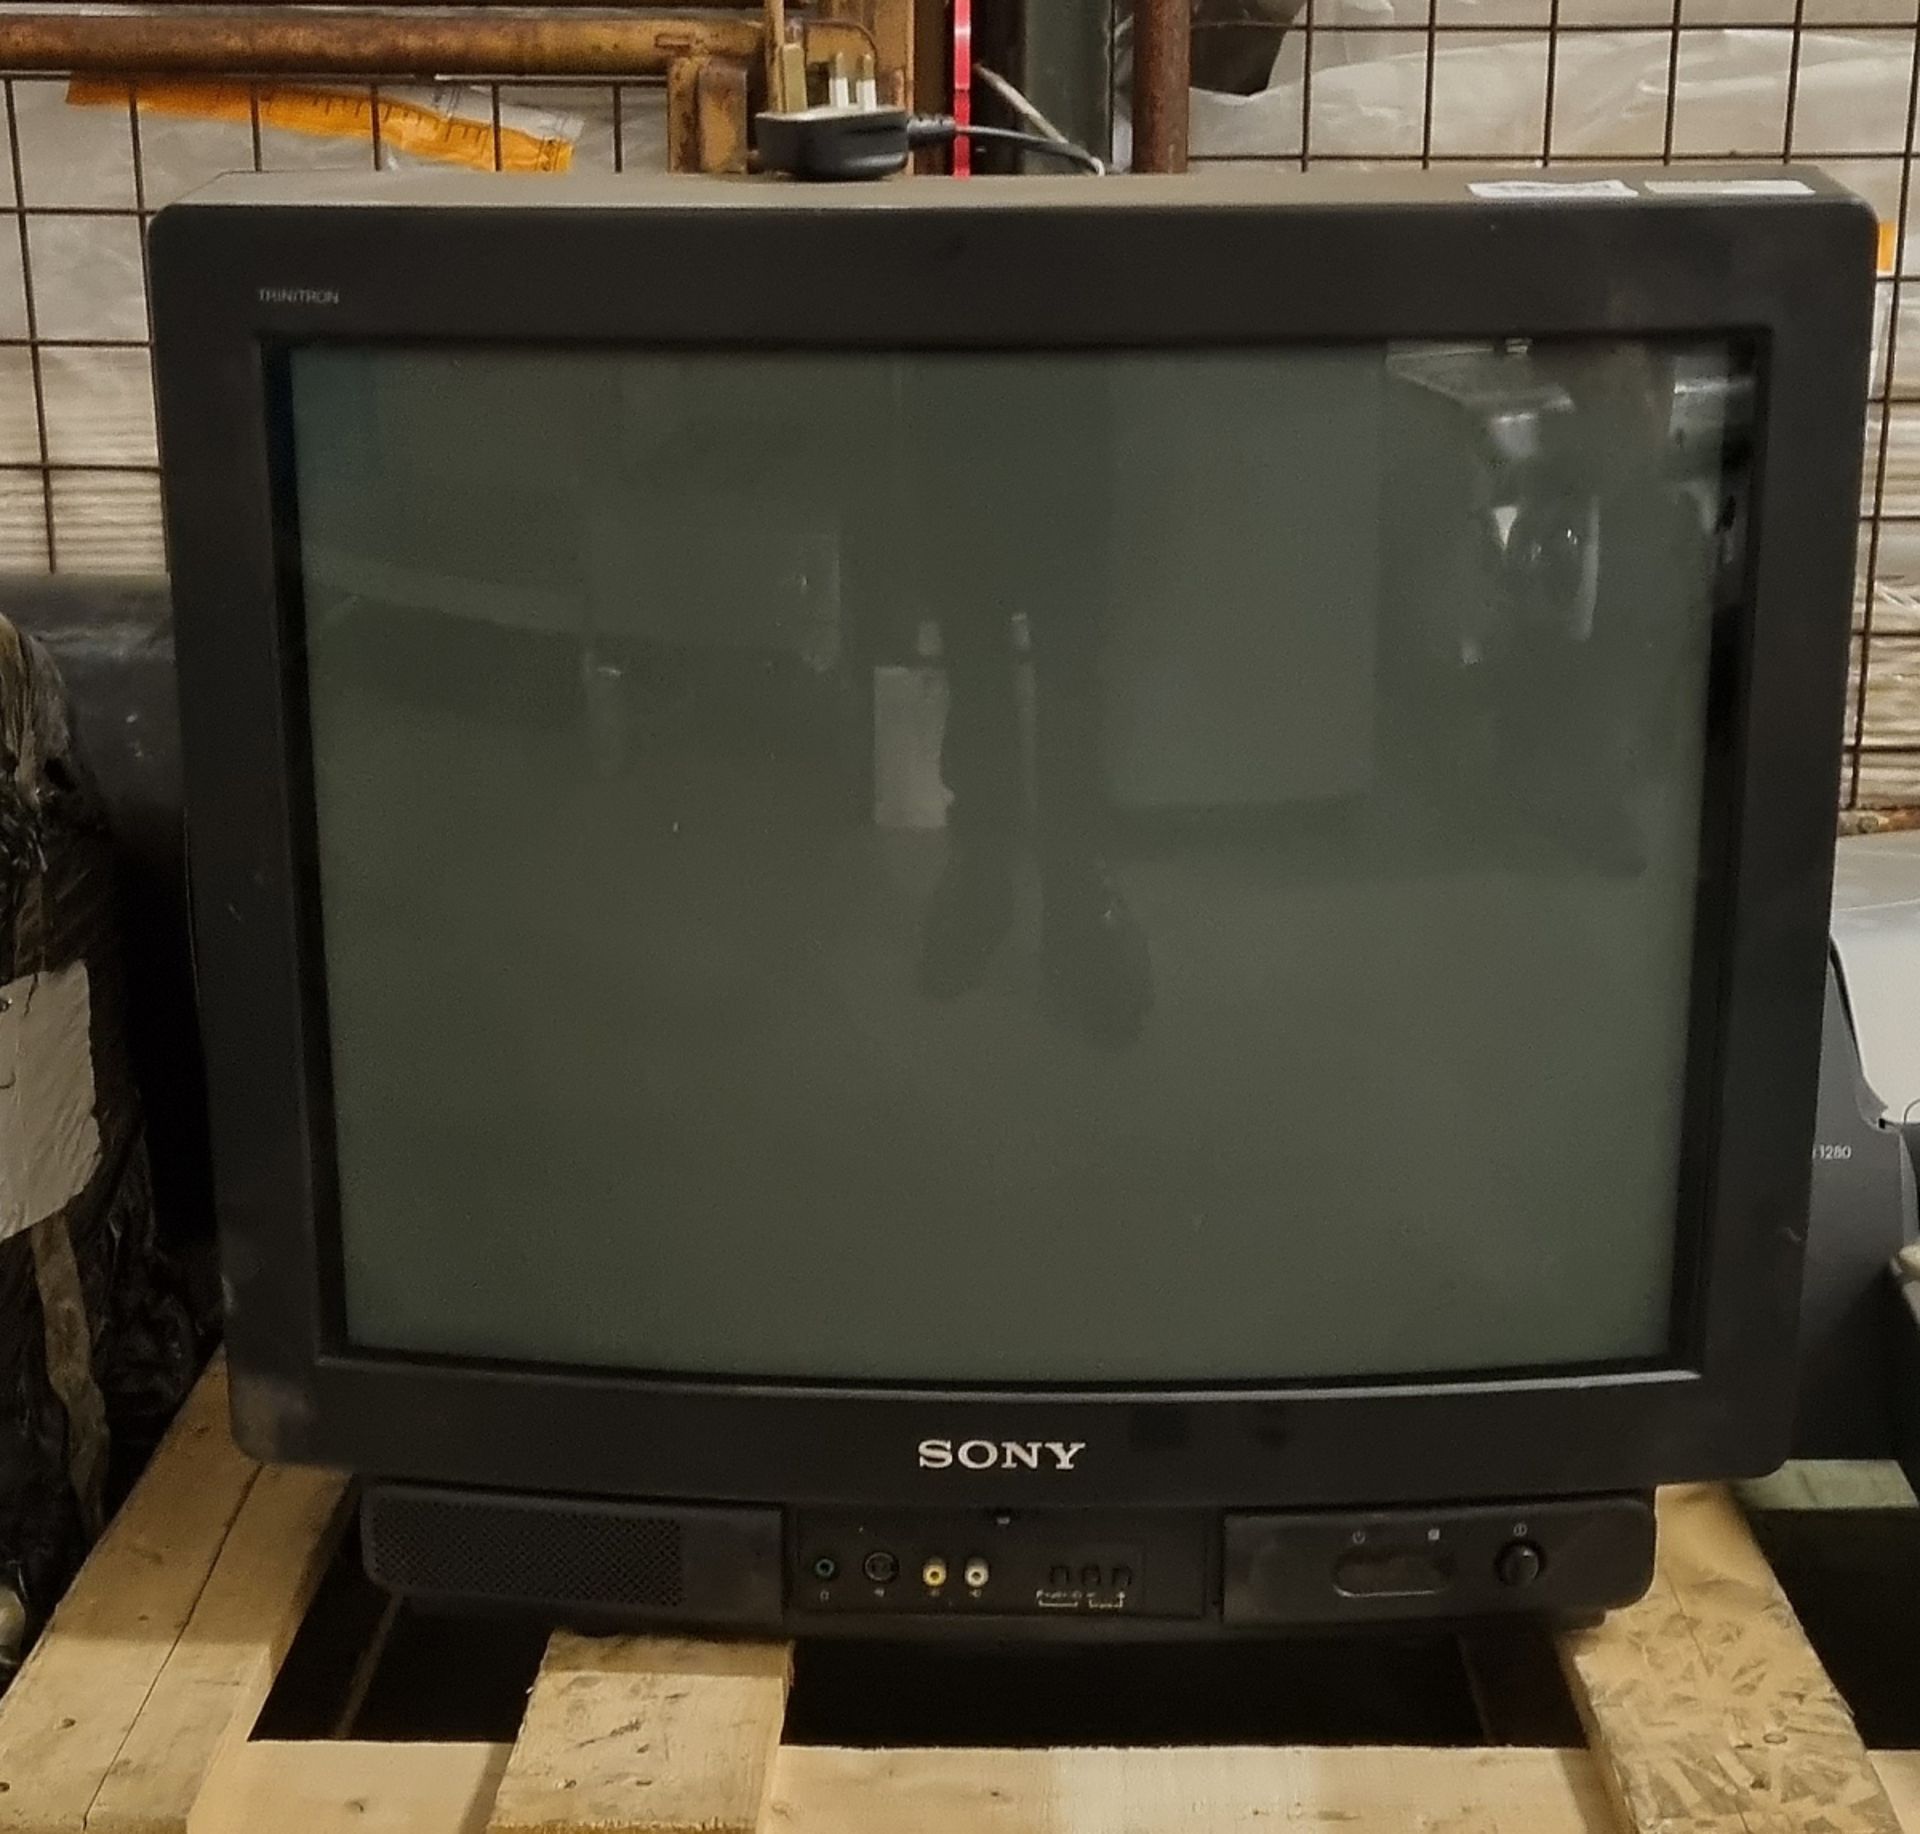 Sony KV-M2521U Trinitron 24 inch colour TV - 240V